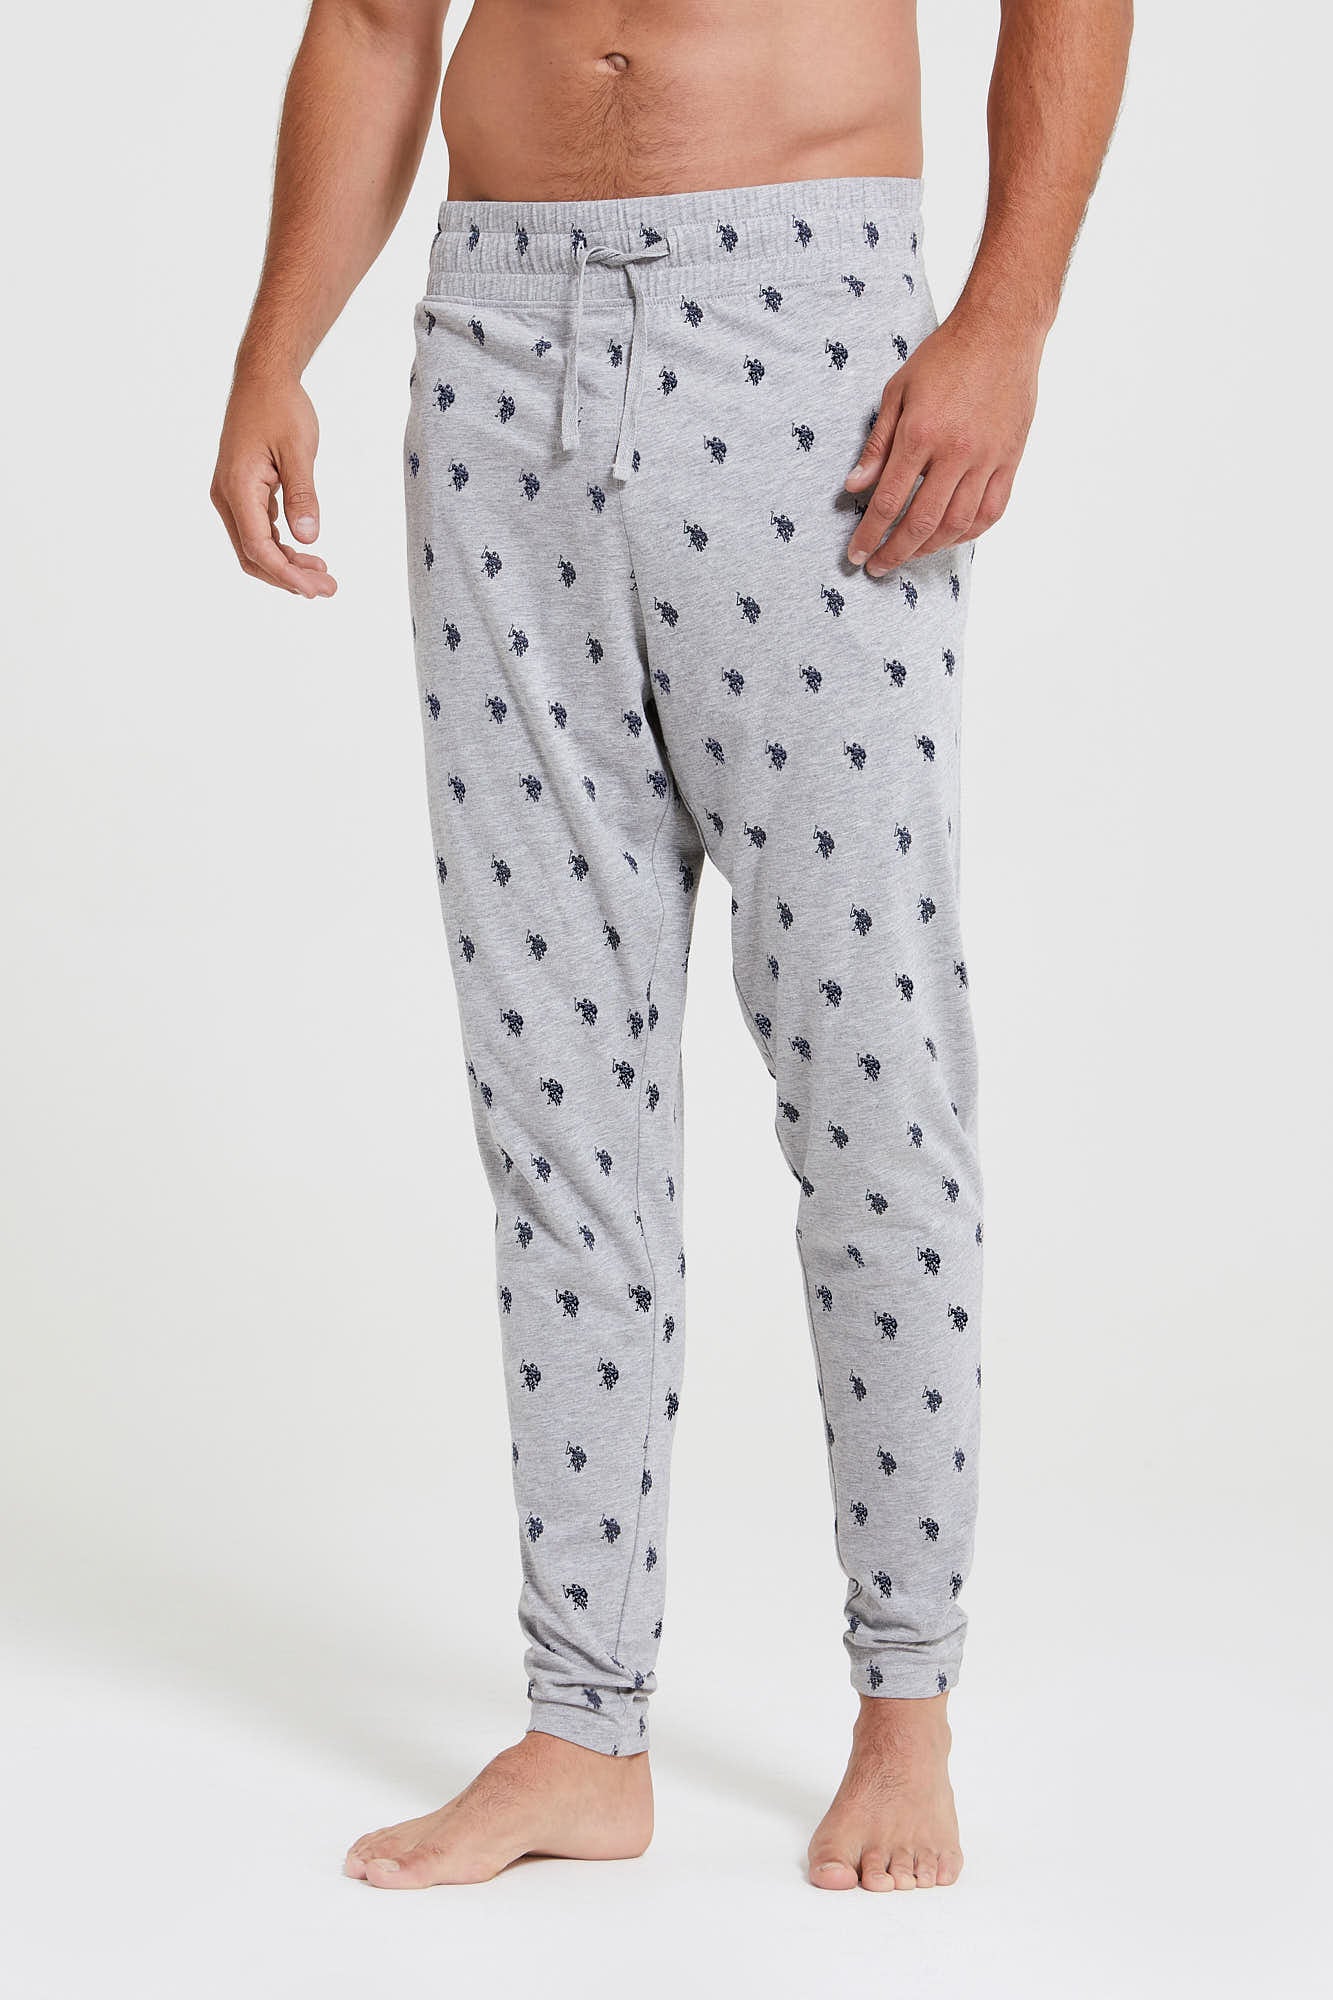 U.S. Polo Assn. Women's Lounge Pajama Sleep Pant 